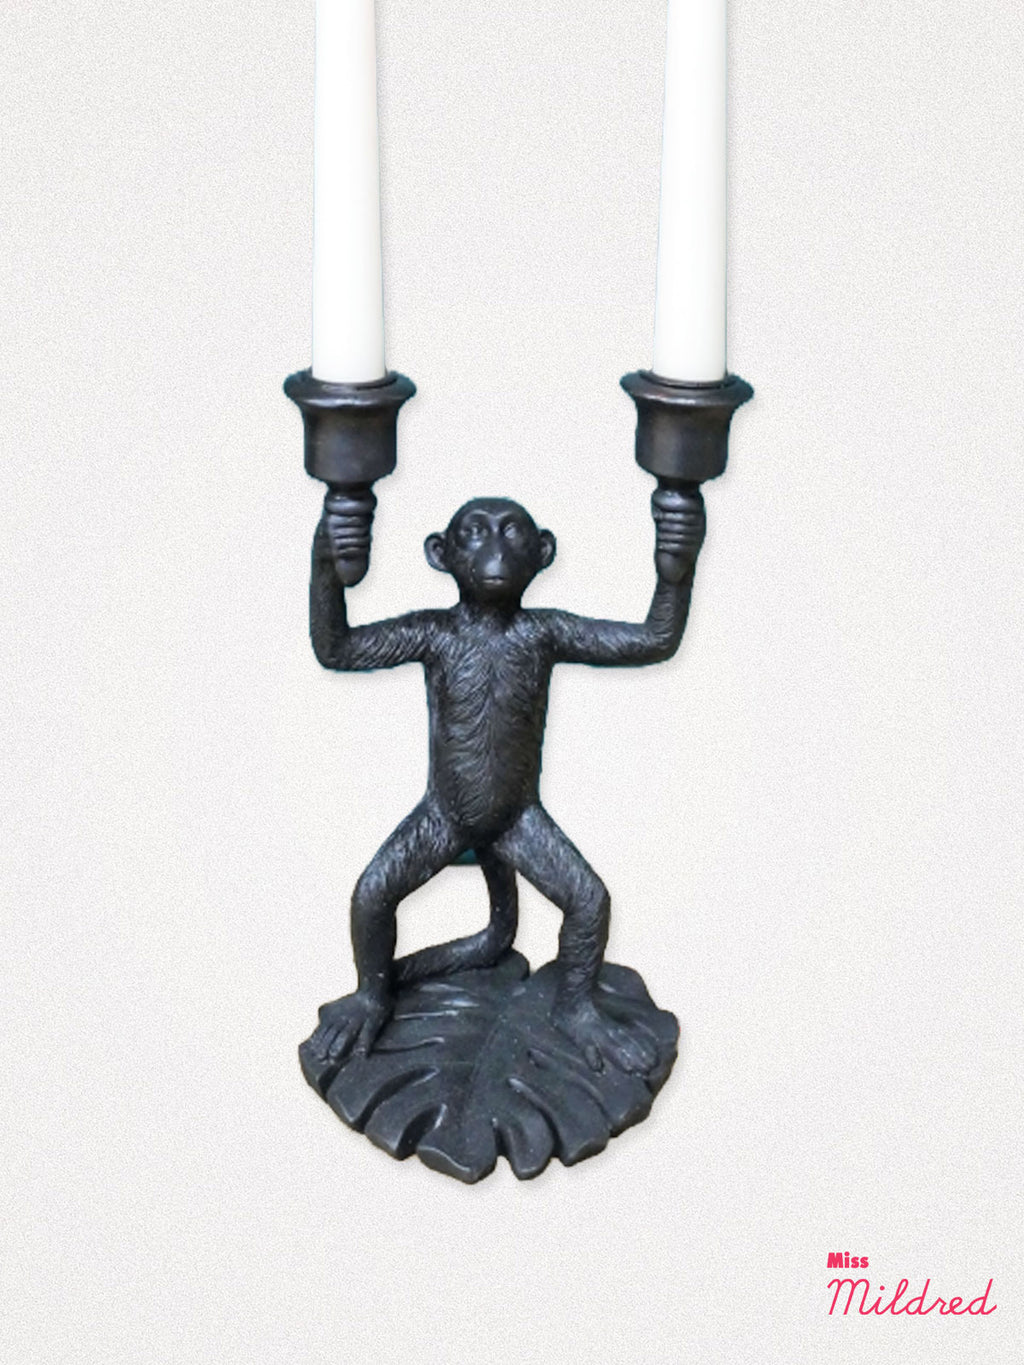 Monkey Candlestick Holder